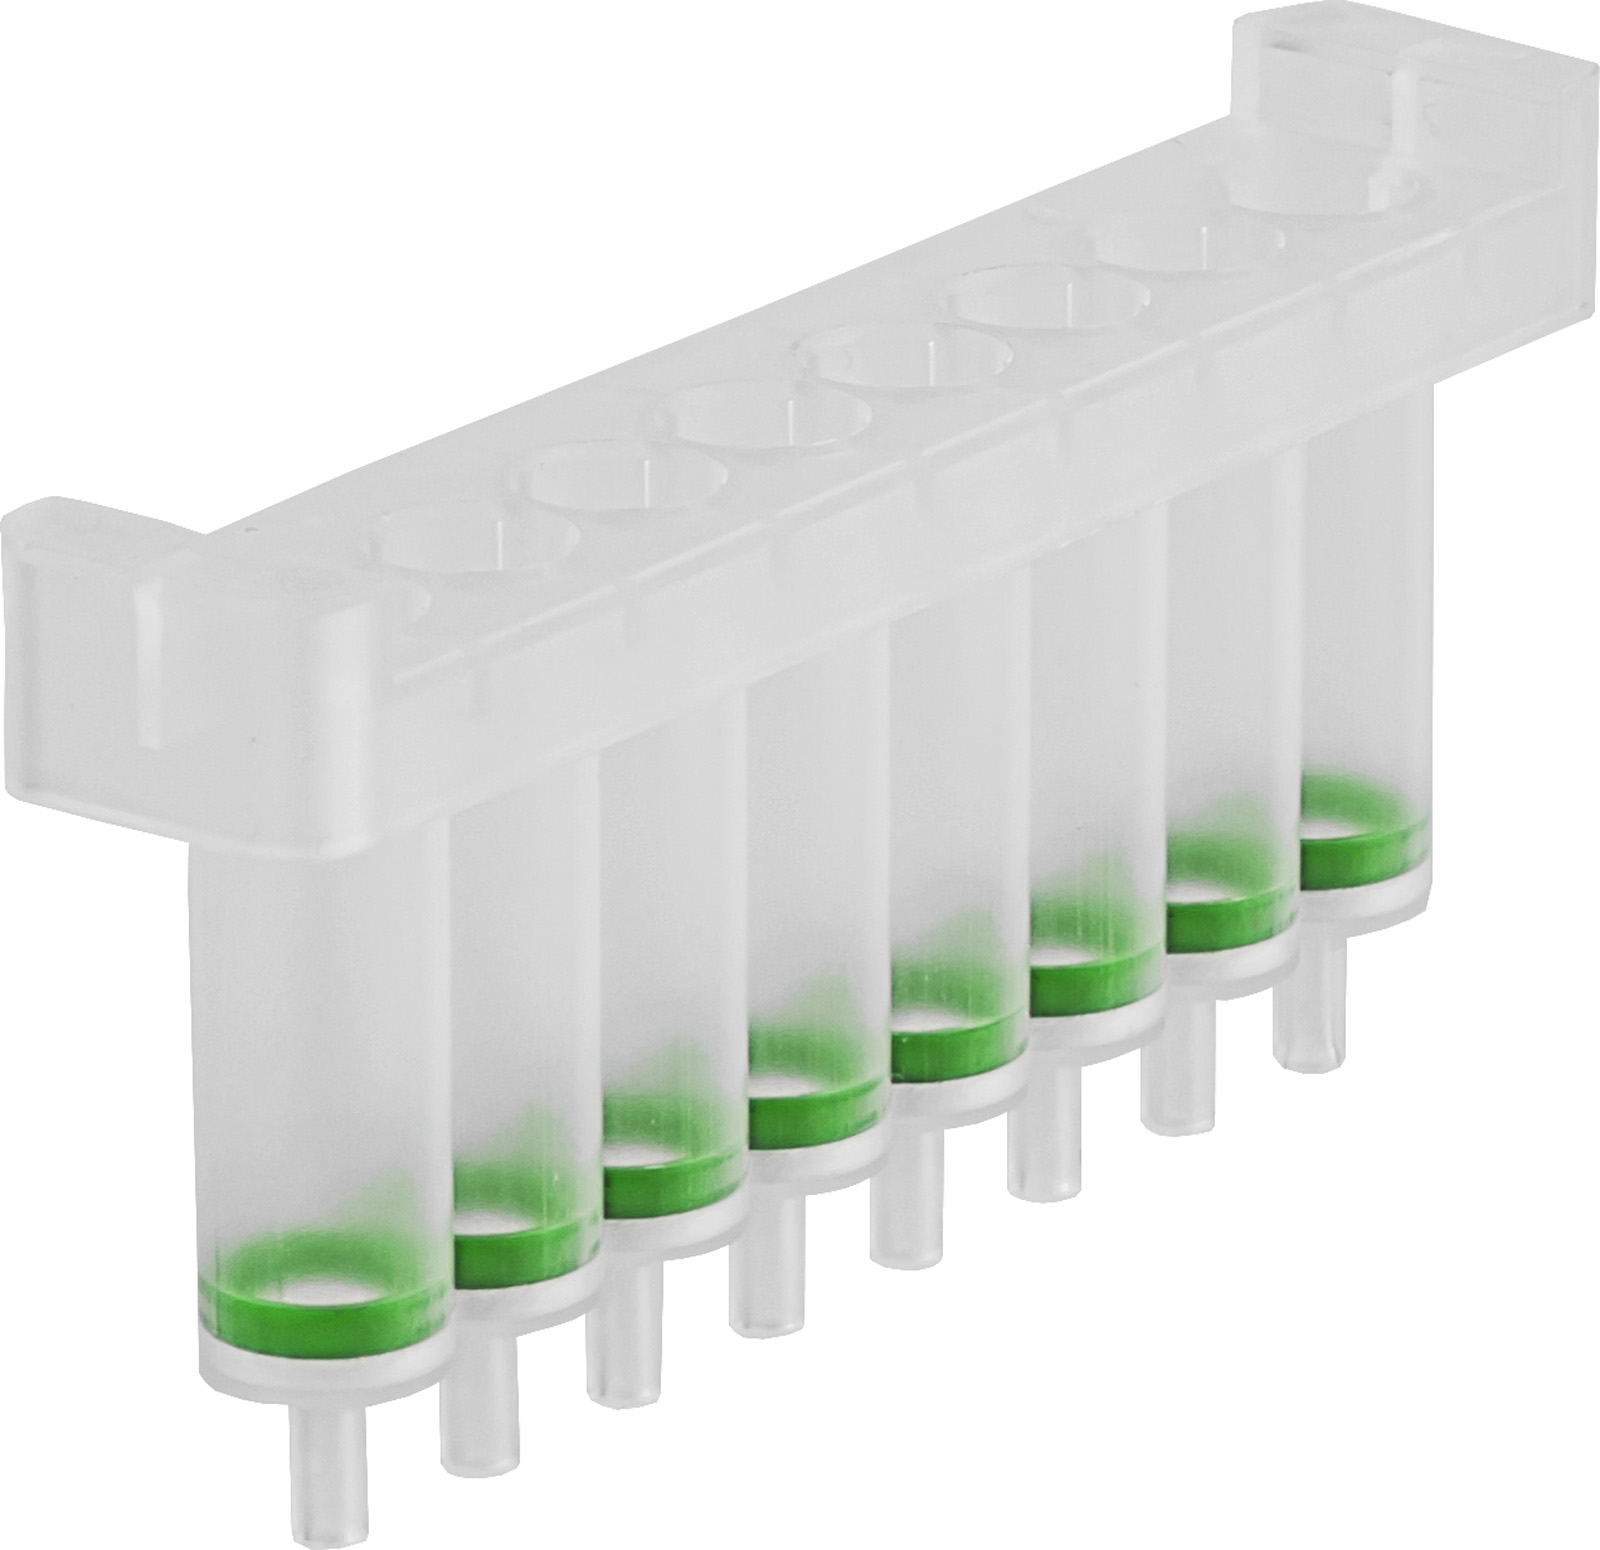 DNA z tkanek i komórek Ręczna bądź automatyczna izolacja (HTP) NucleoSpin 8 Tissue Core Kit